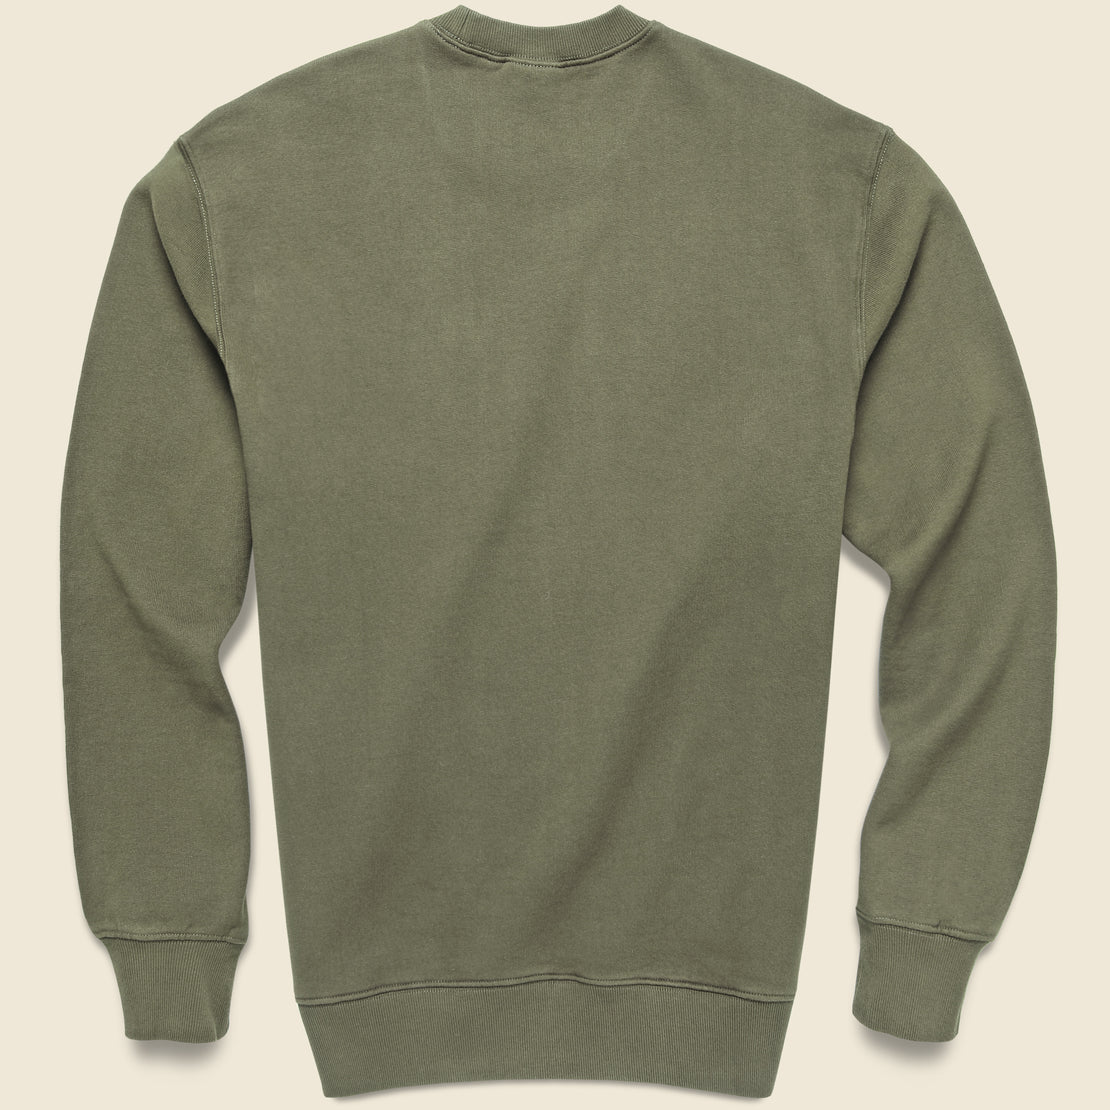 Pocket Sweatshirt - Seaweed - Carhartt WIP - STAG Provisions - Tops - Fleece / Sweatshirt